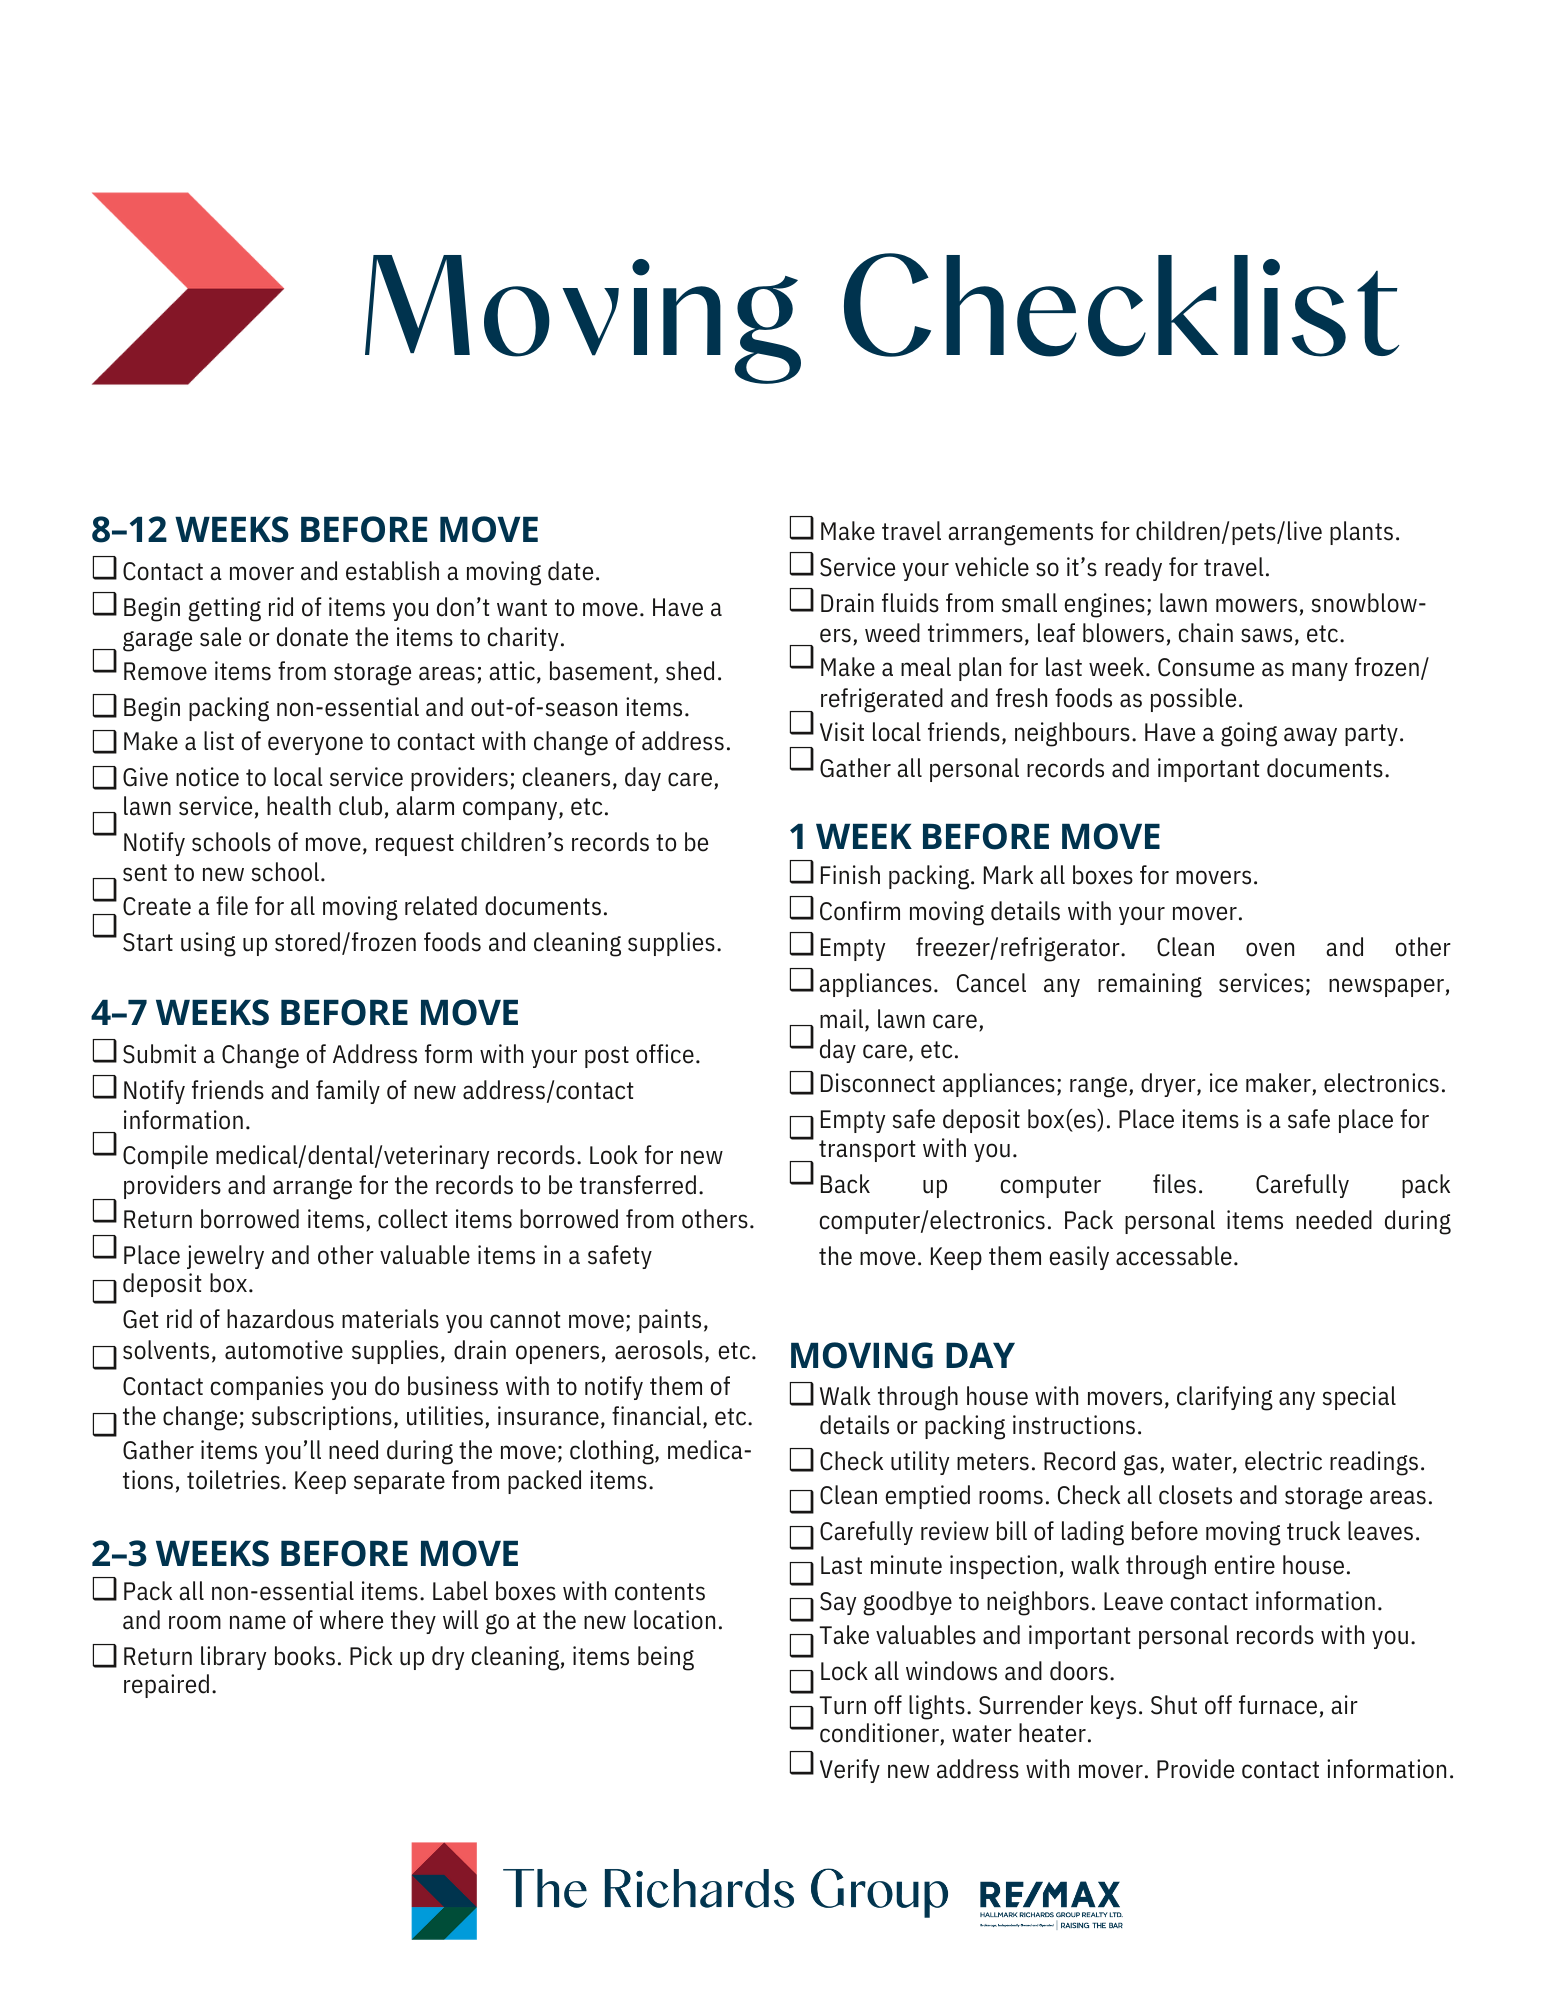 moving checklist